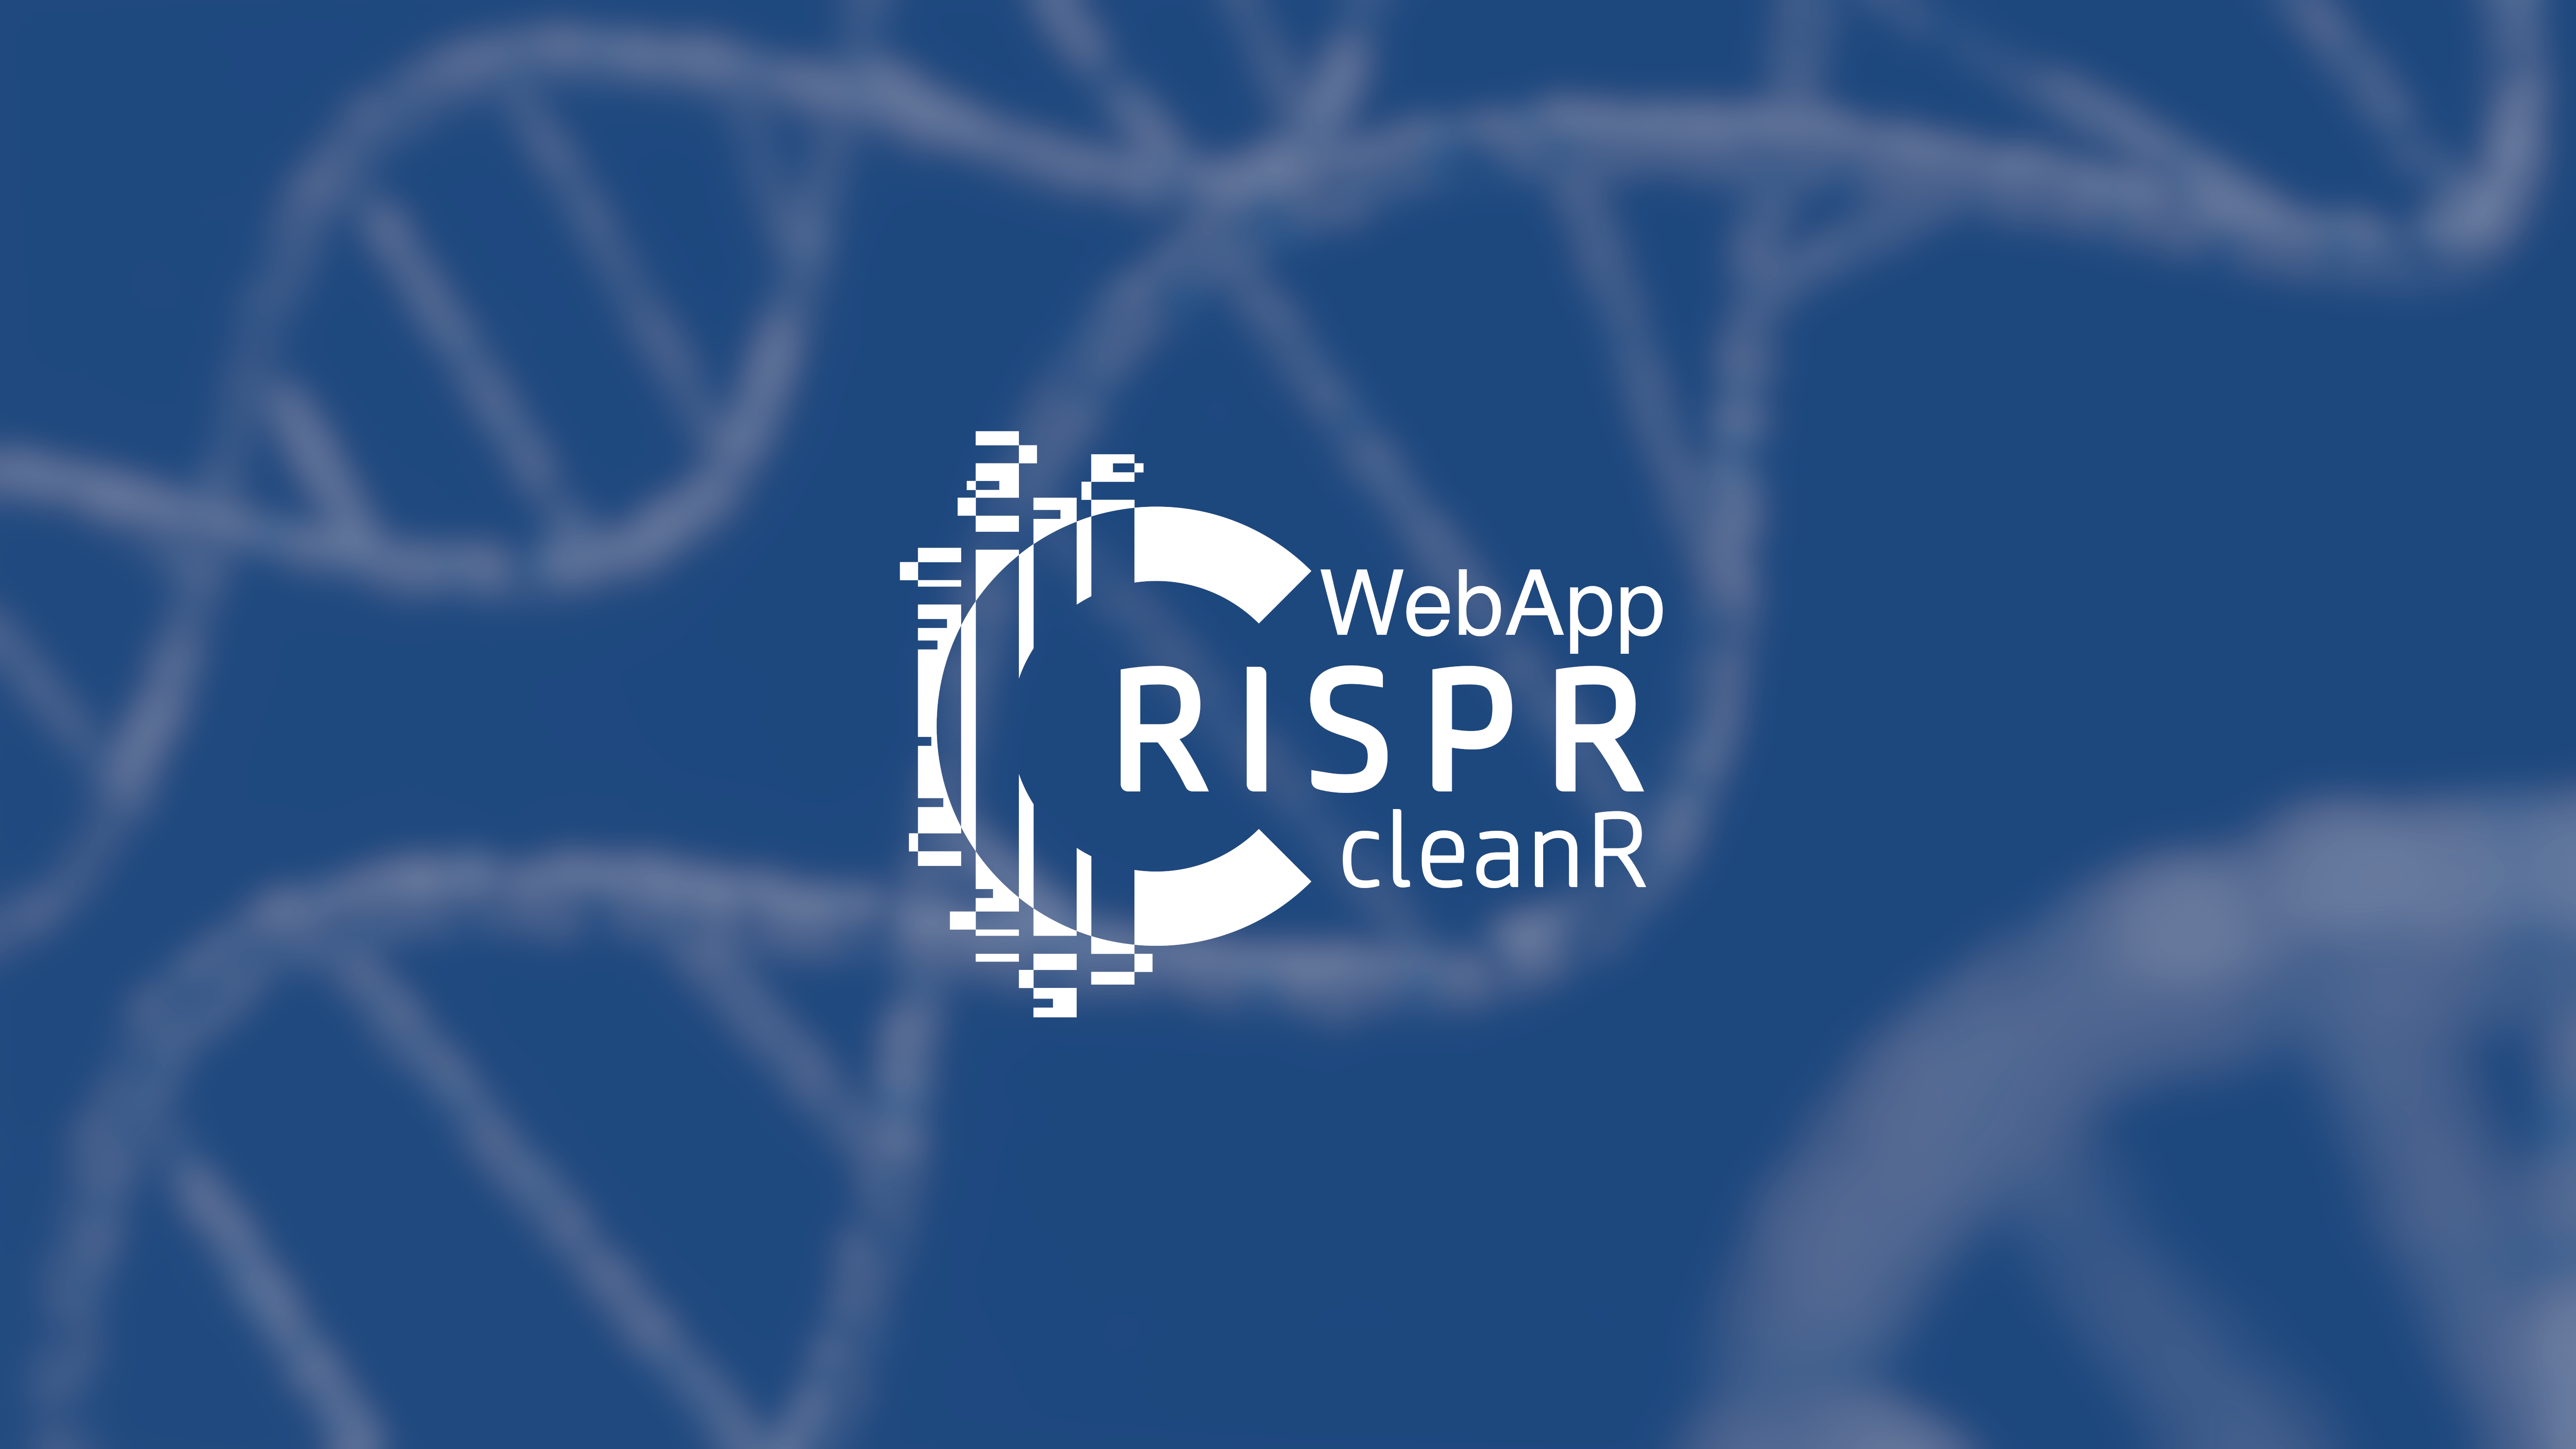 CRISPRcleanR WebApp makes your life easier with CRISPR-Cas9 screens